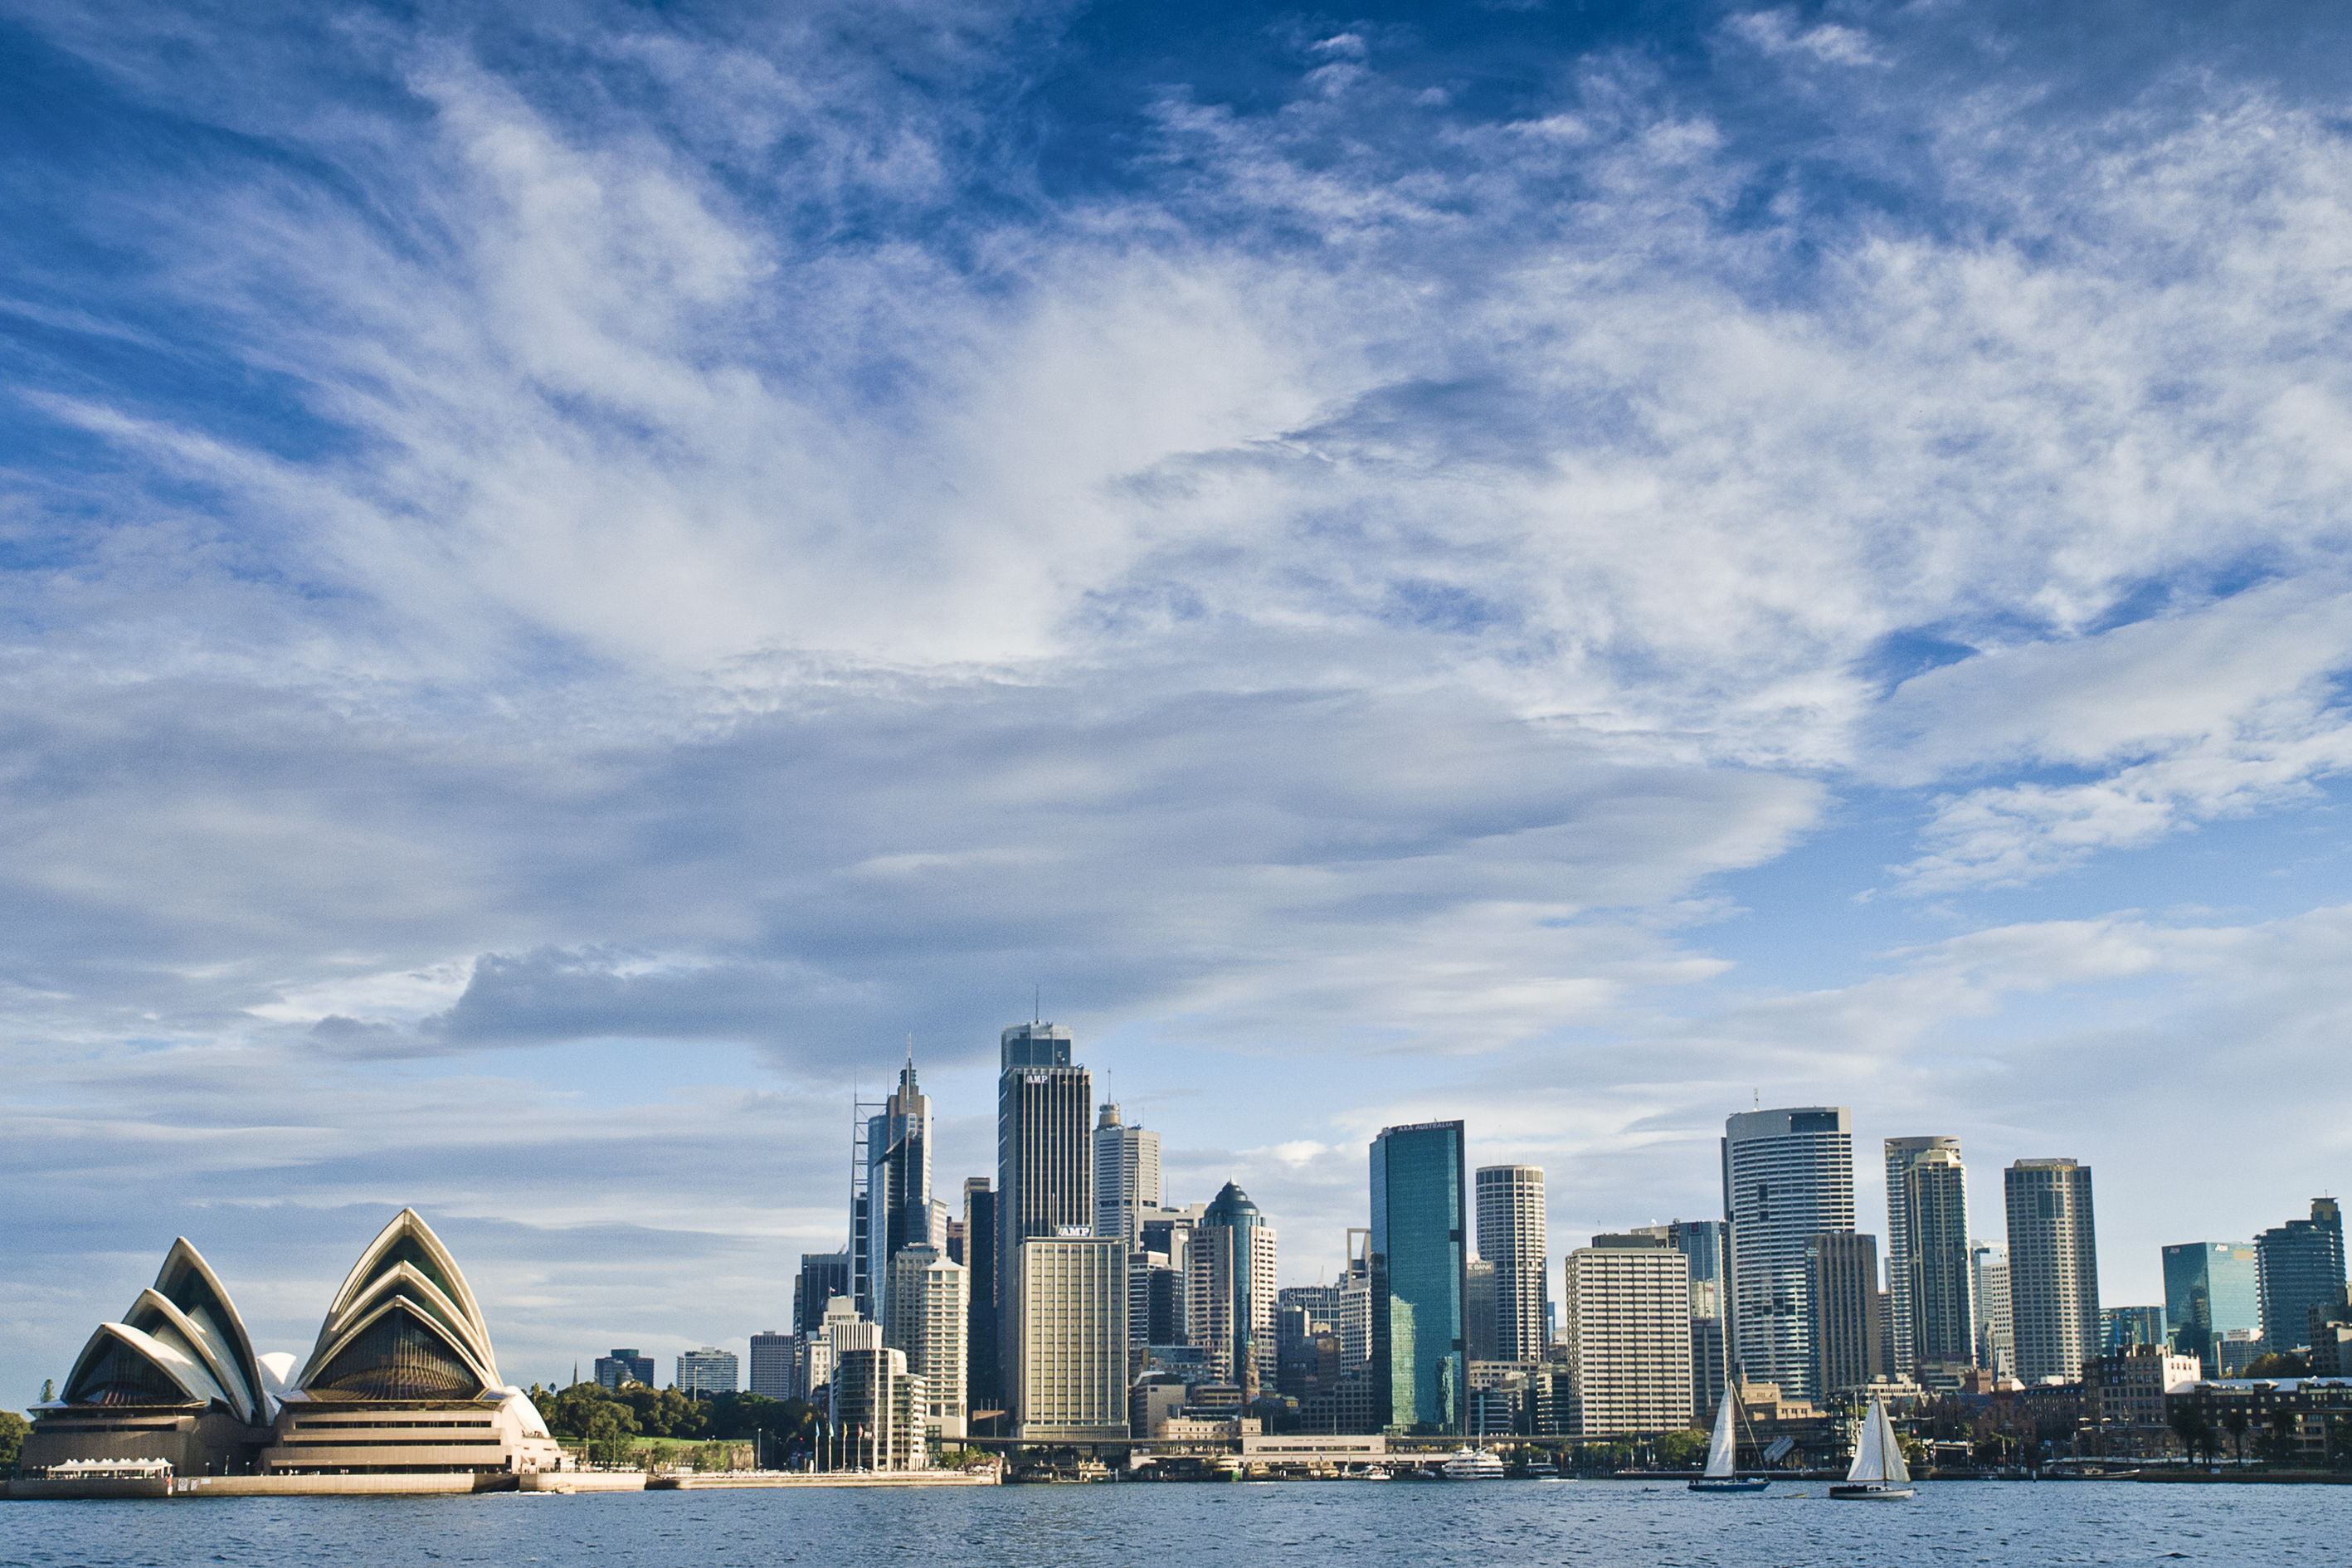 Australia, Sydney, Opera house and skyline